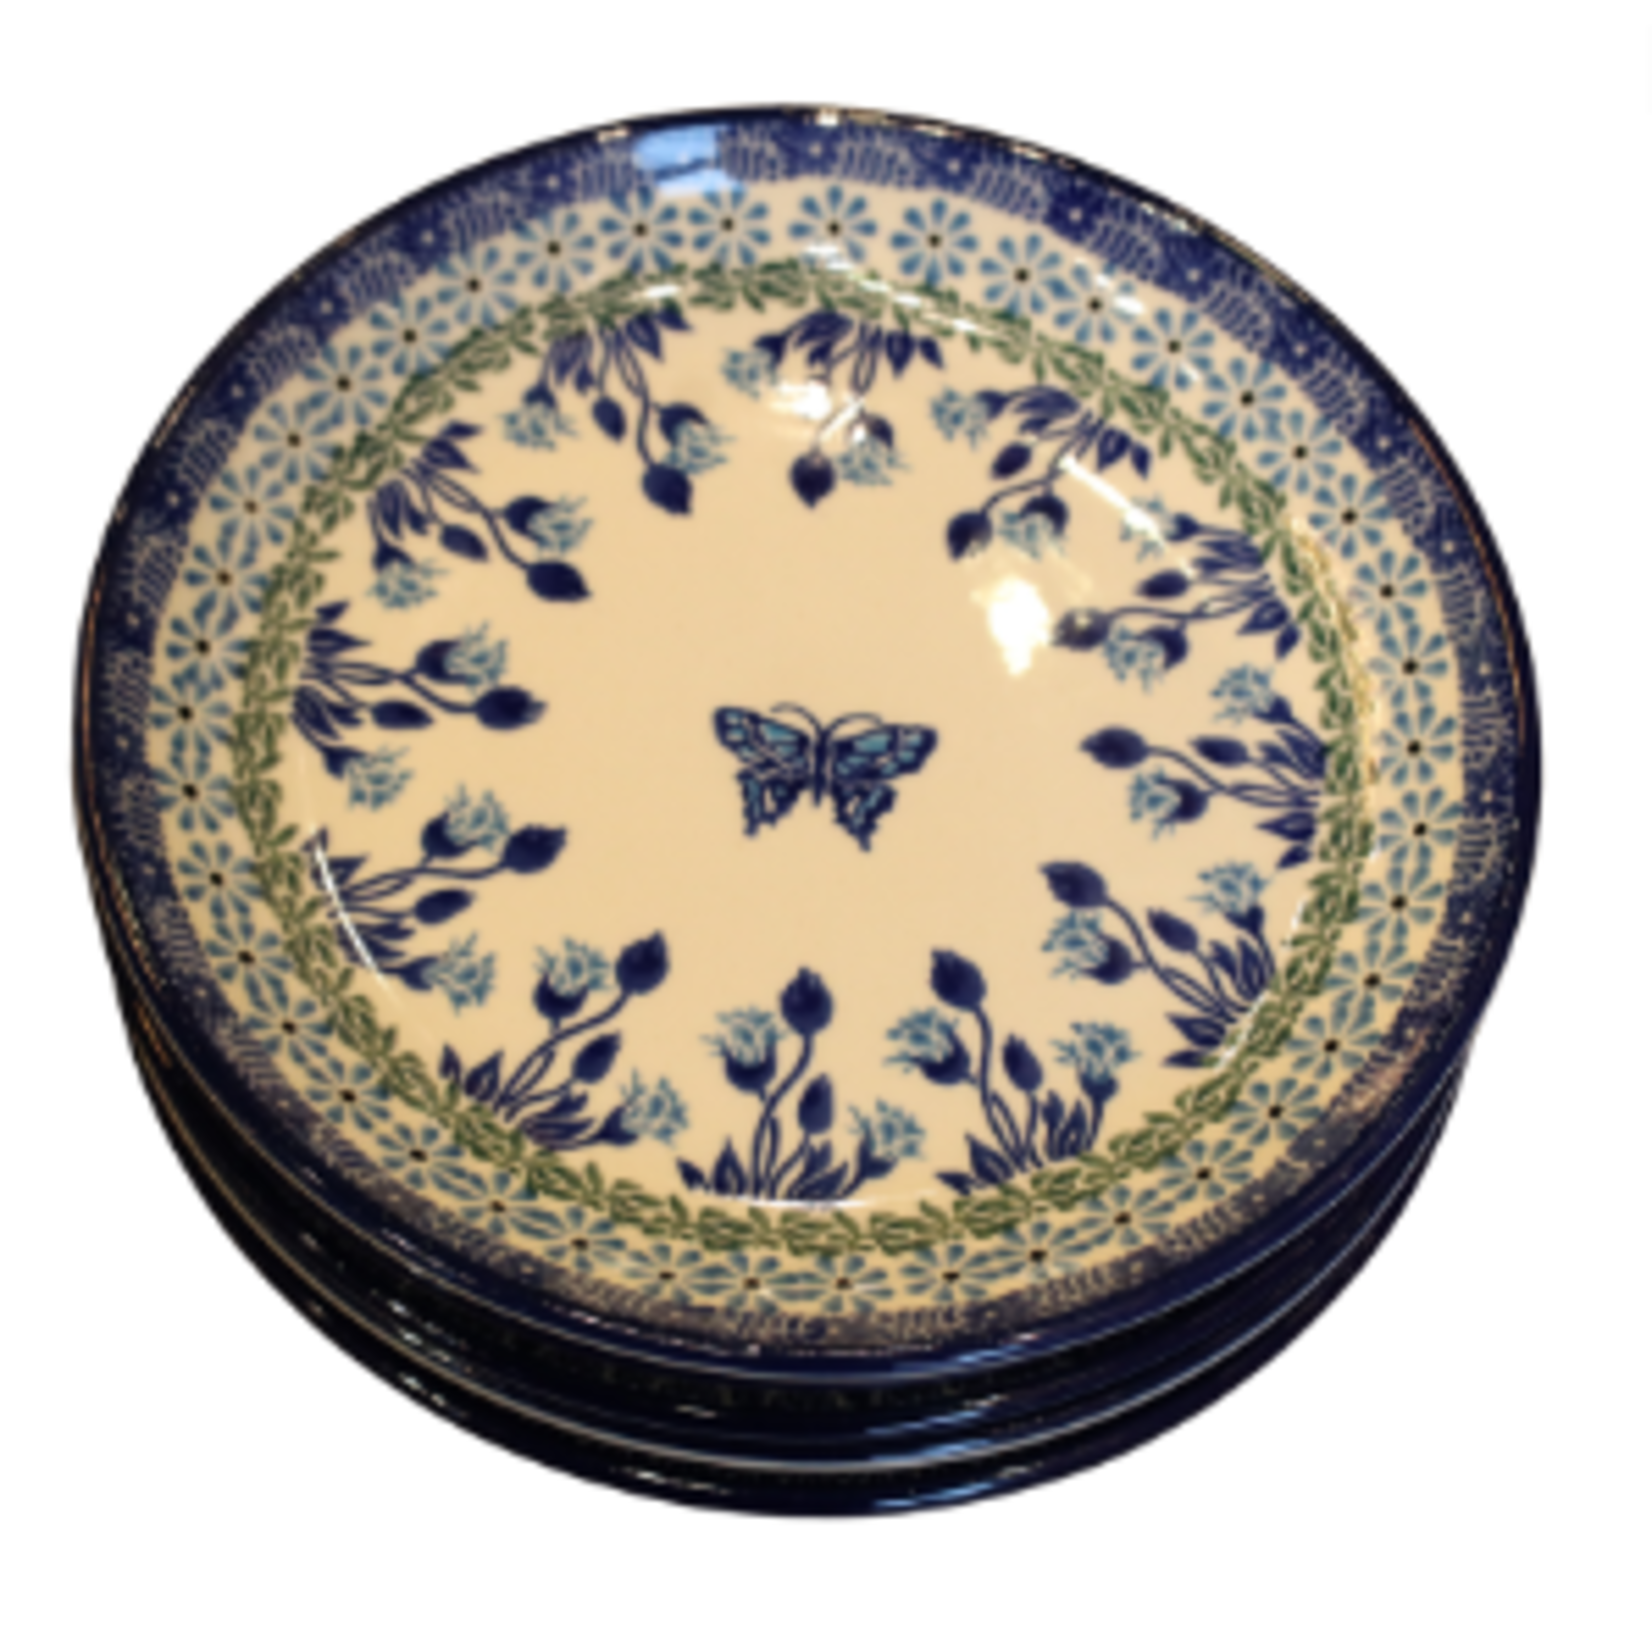 European Design Imports Inc. Polish Pottery Dessert Plate, Butterfly